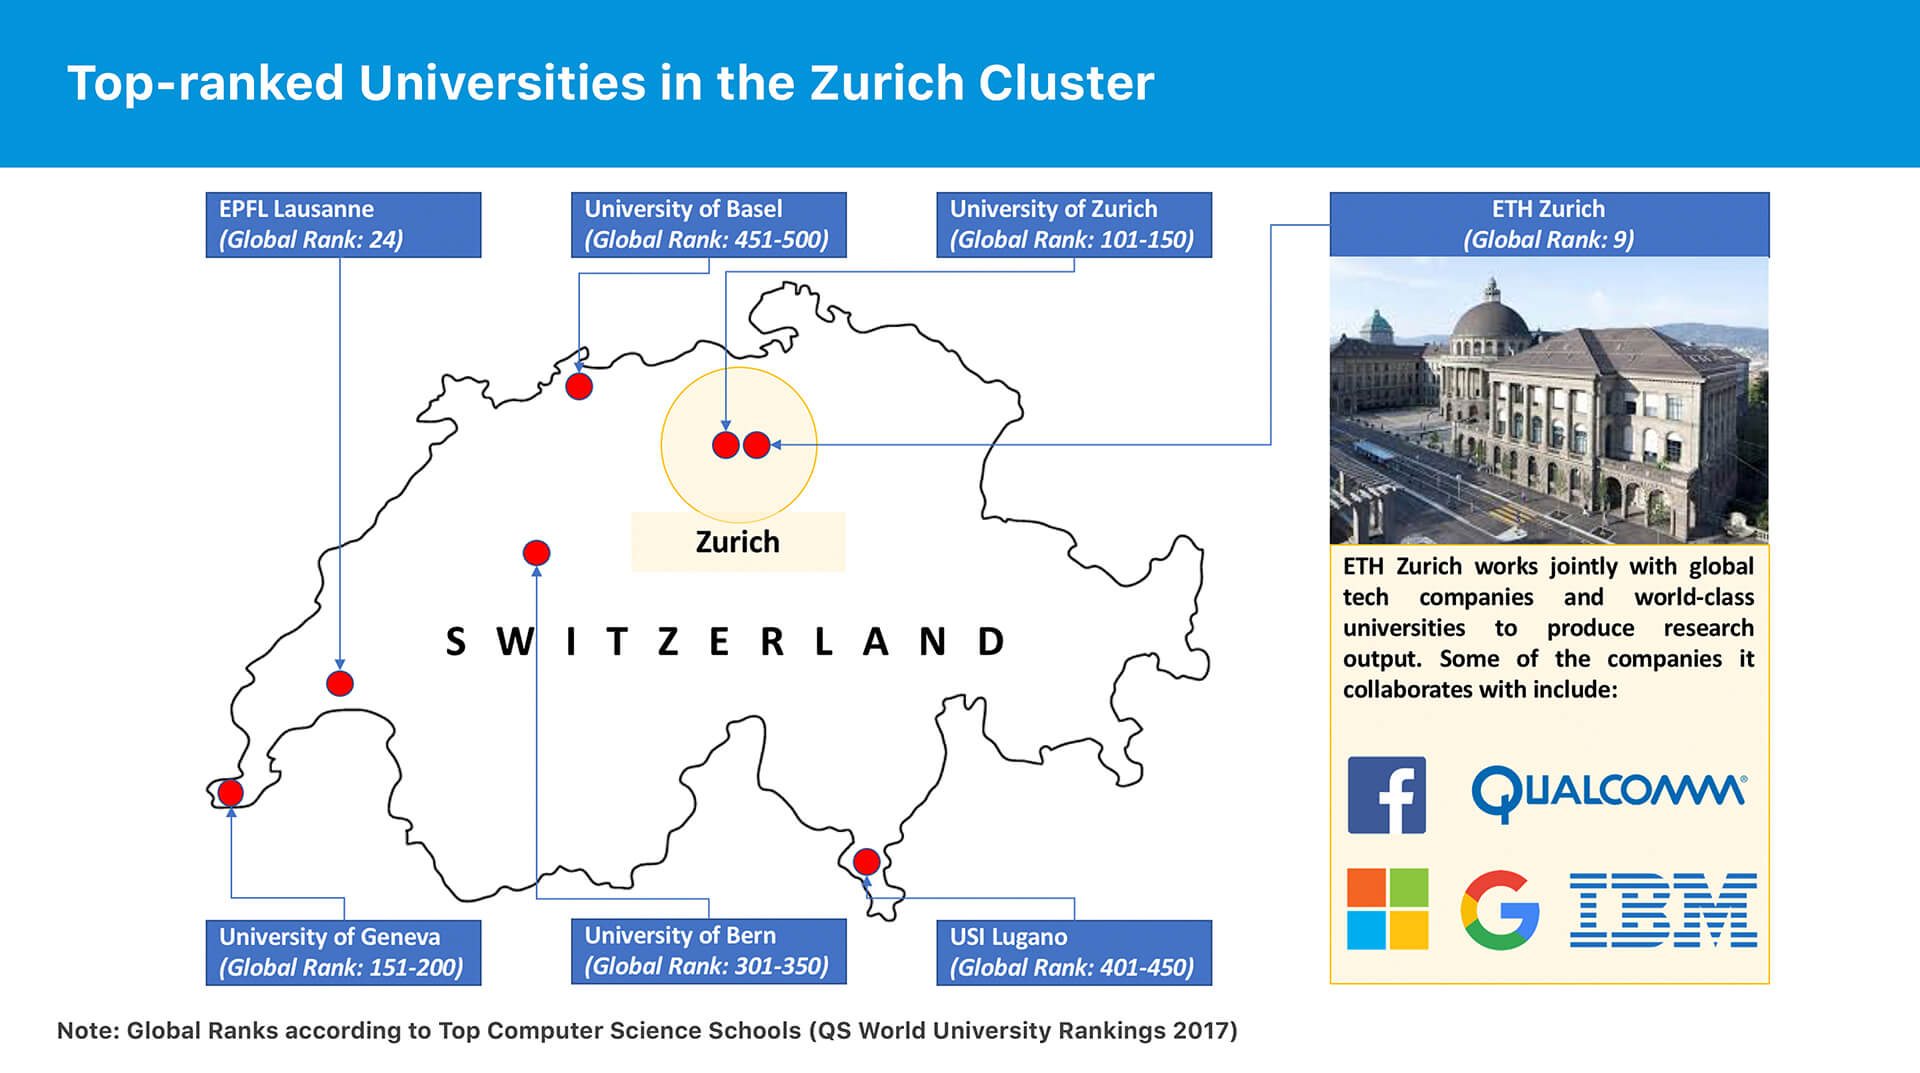 Top-ranked universities in the Zurich cluster